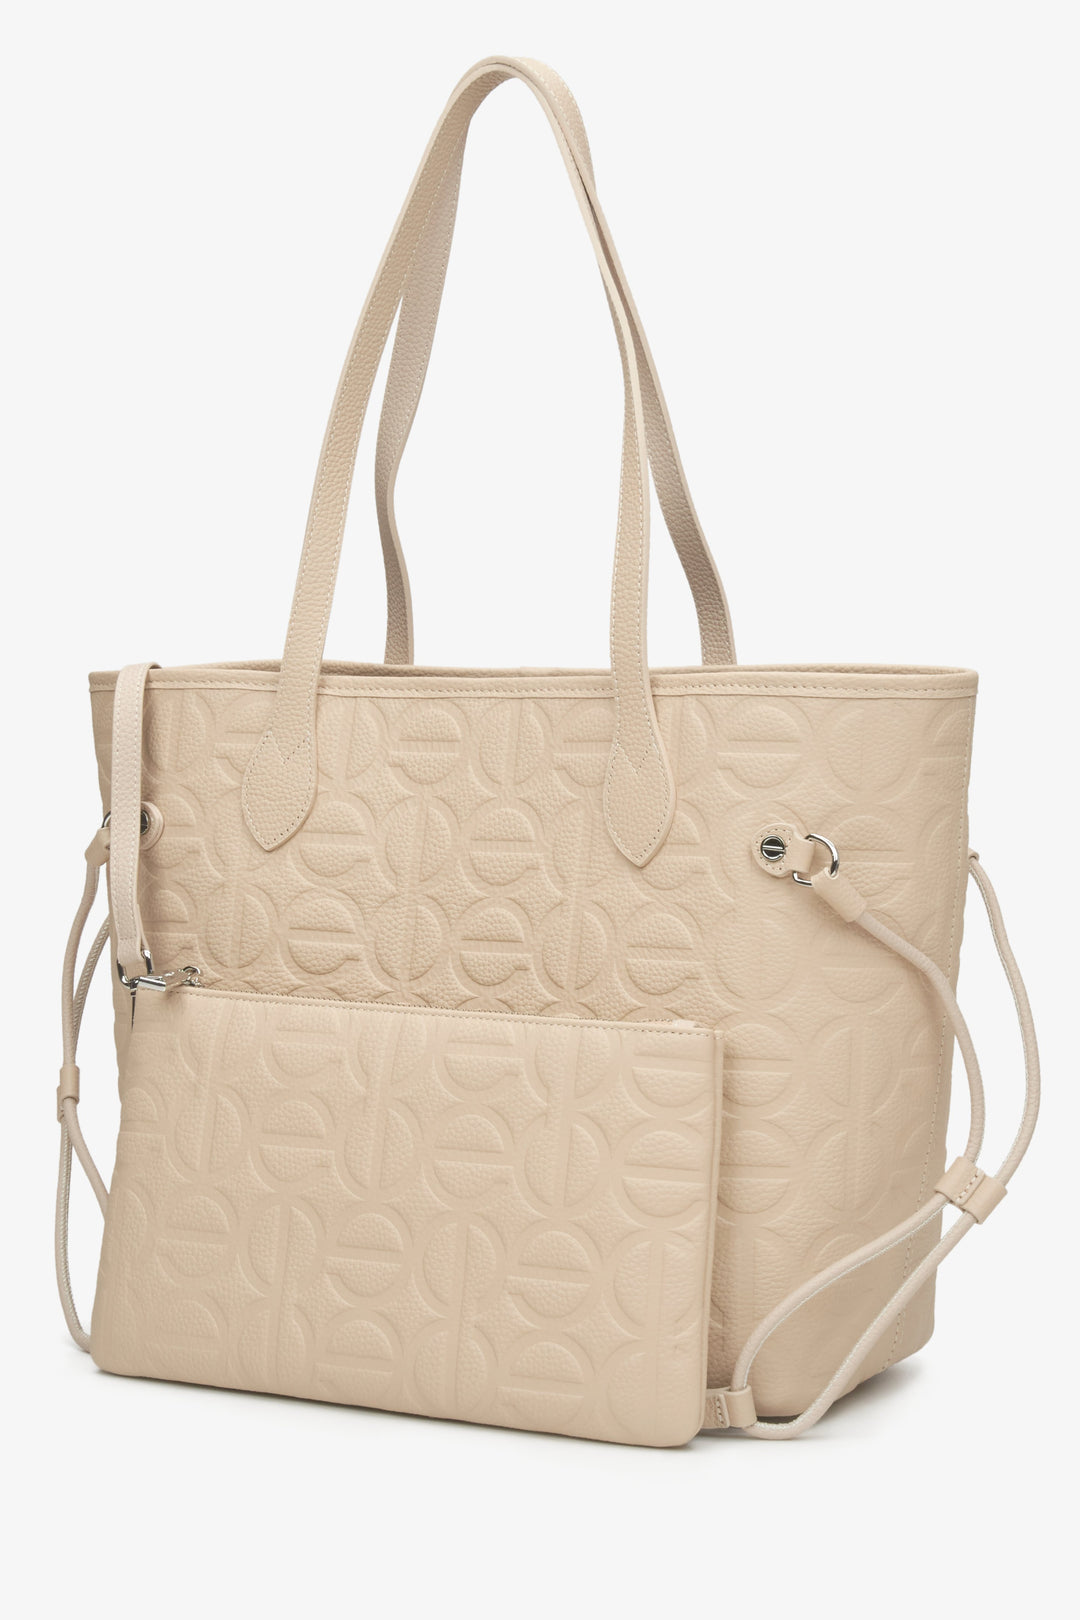 Women's beige Estro shopper bag.